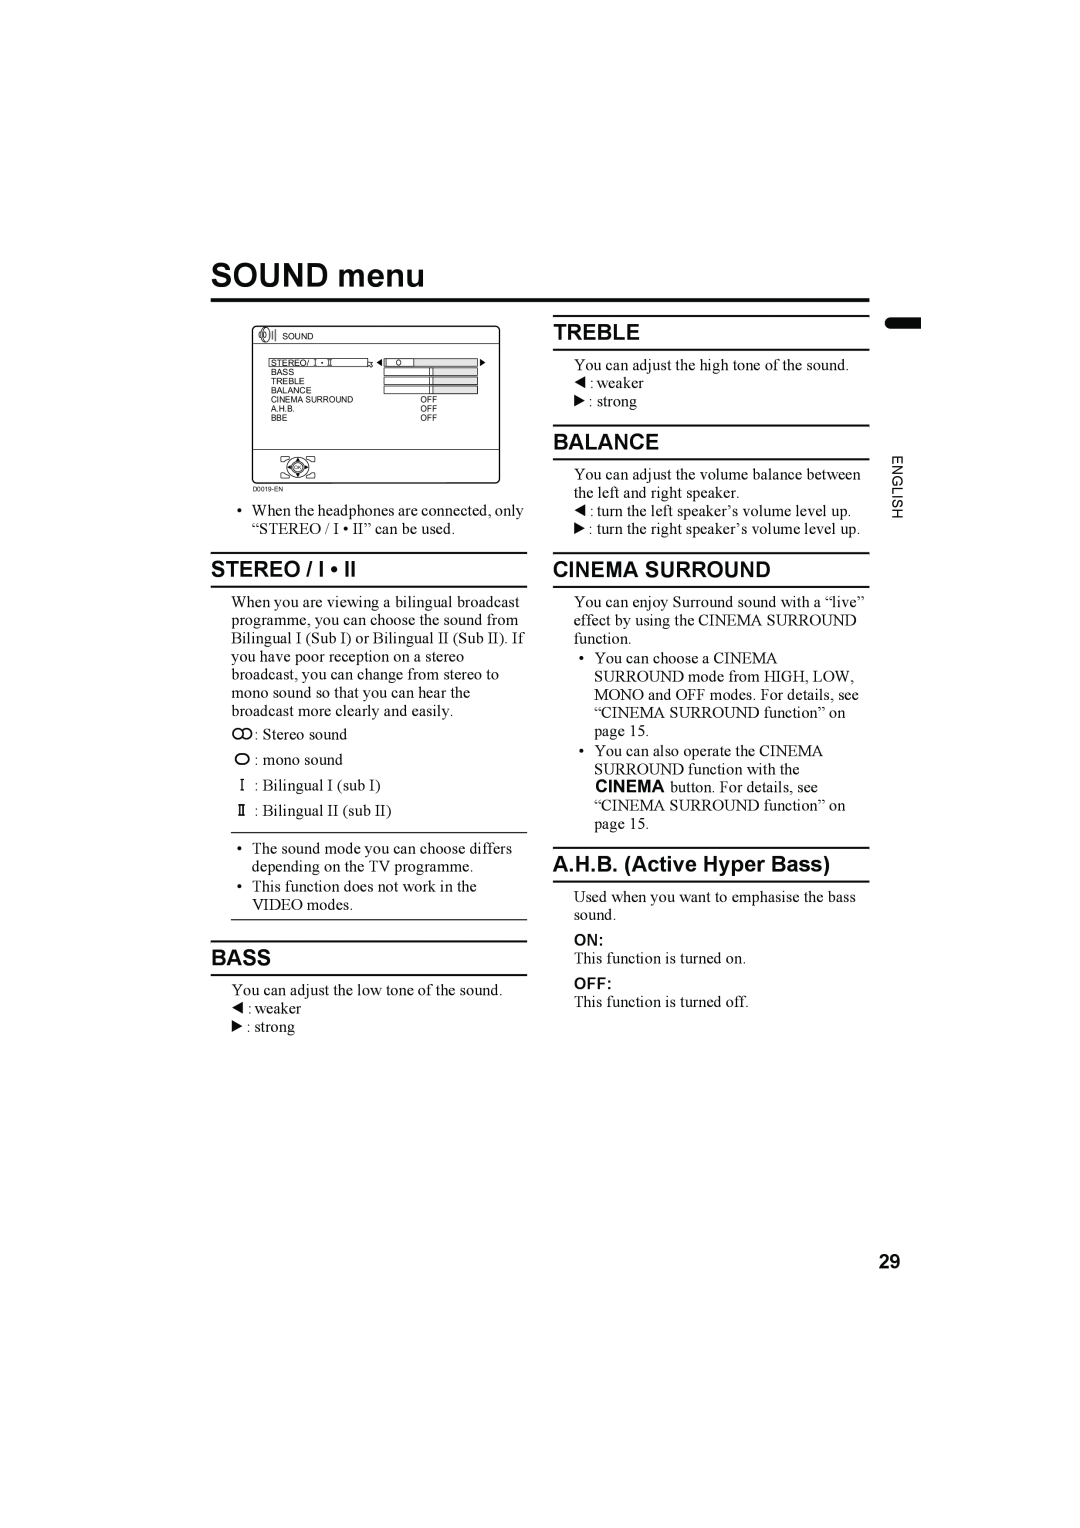 JVC LT-Z32SX4B manual SOUND menu, Treble, Balance, Stereo / I, Cinema Surround, A.H.B. Active Hyper Bass 